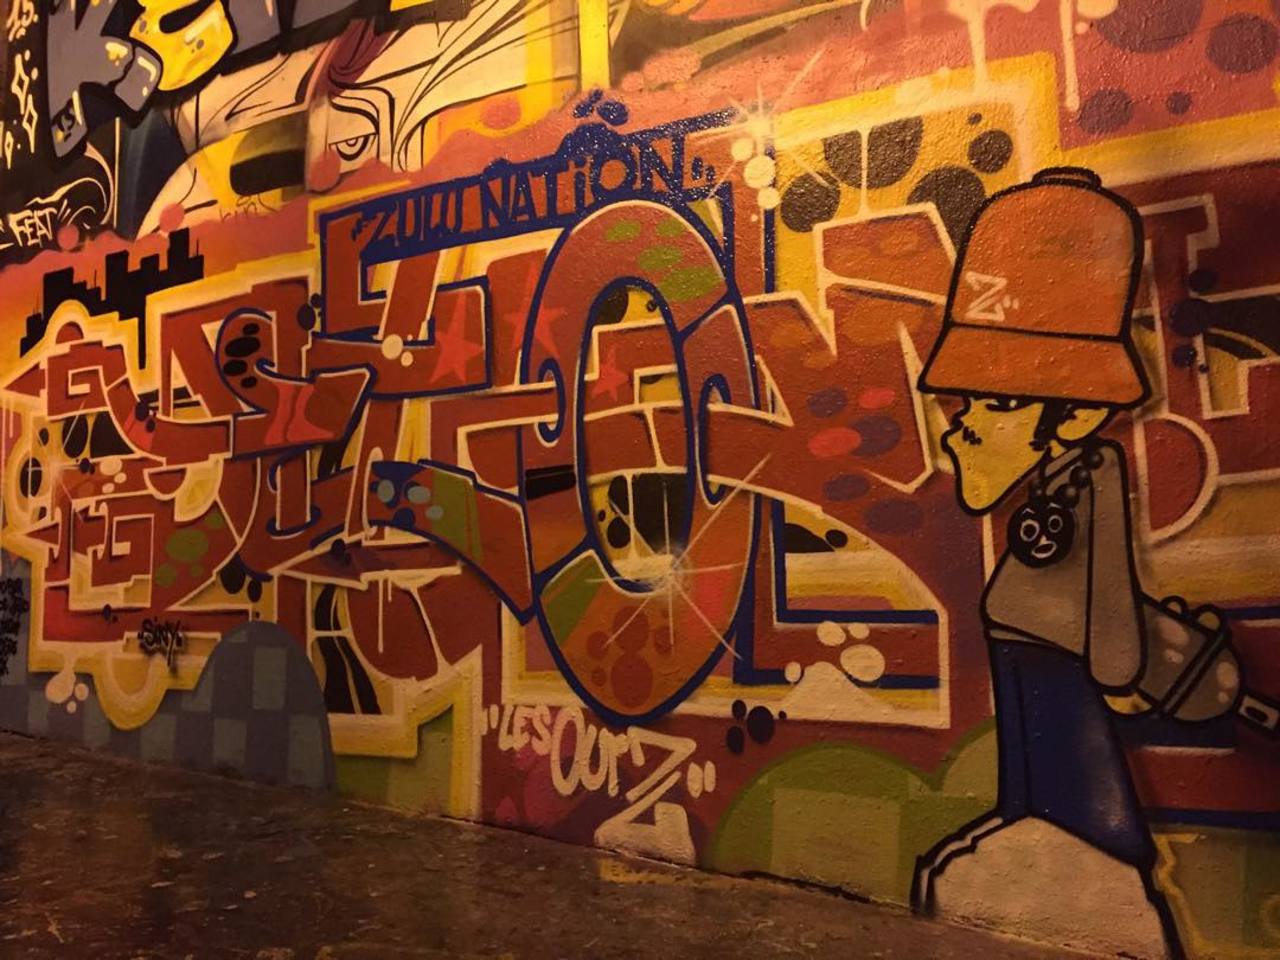 #Paris #graffiti photo by wouye http://ift.tt/1VY2AWT #StreetArt http://t.co/yB78vnm5Ya https://goo.gl/t4fpx2